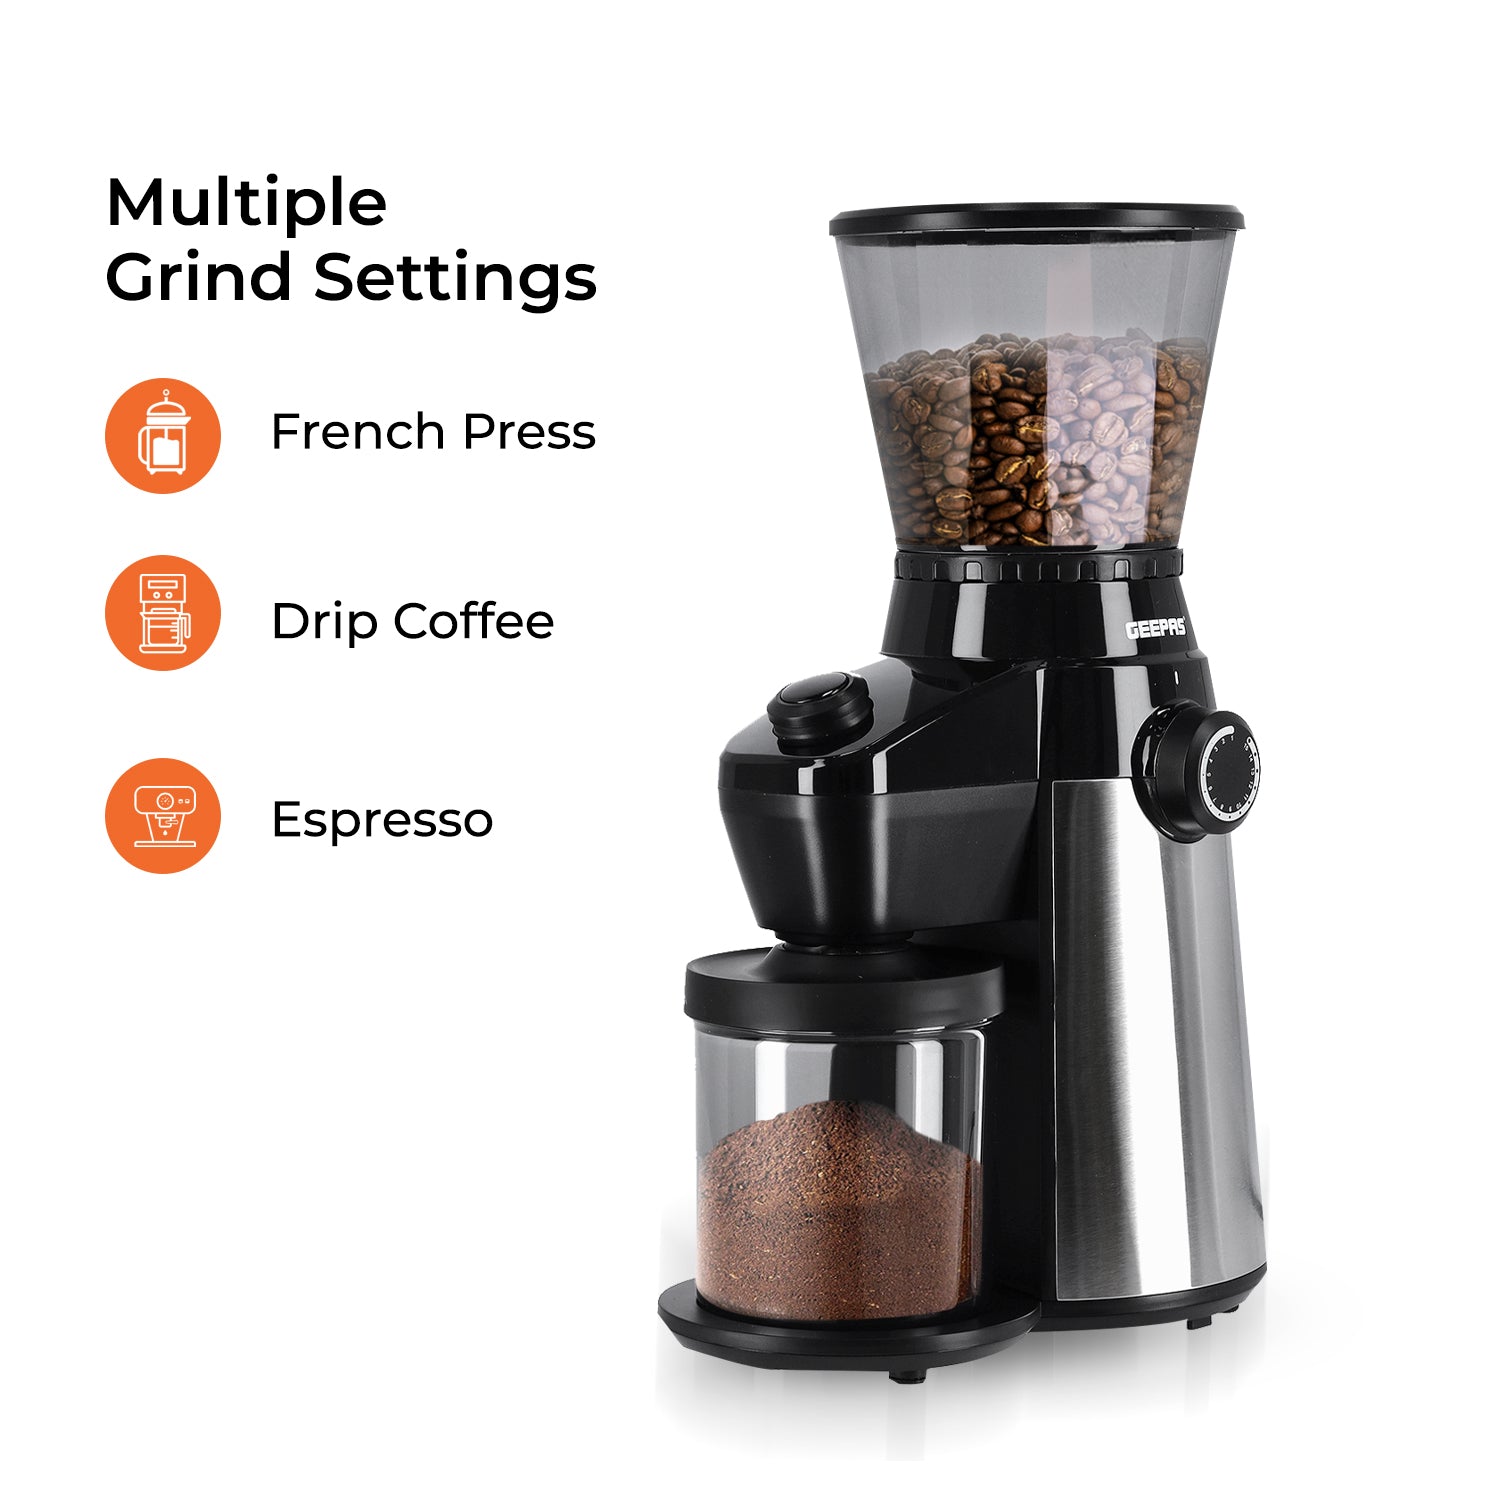 15 Fine Grind Setting Conical Burr Coffee Bean Grinder